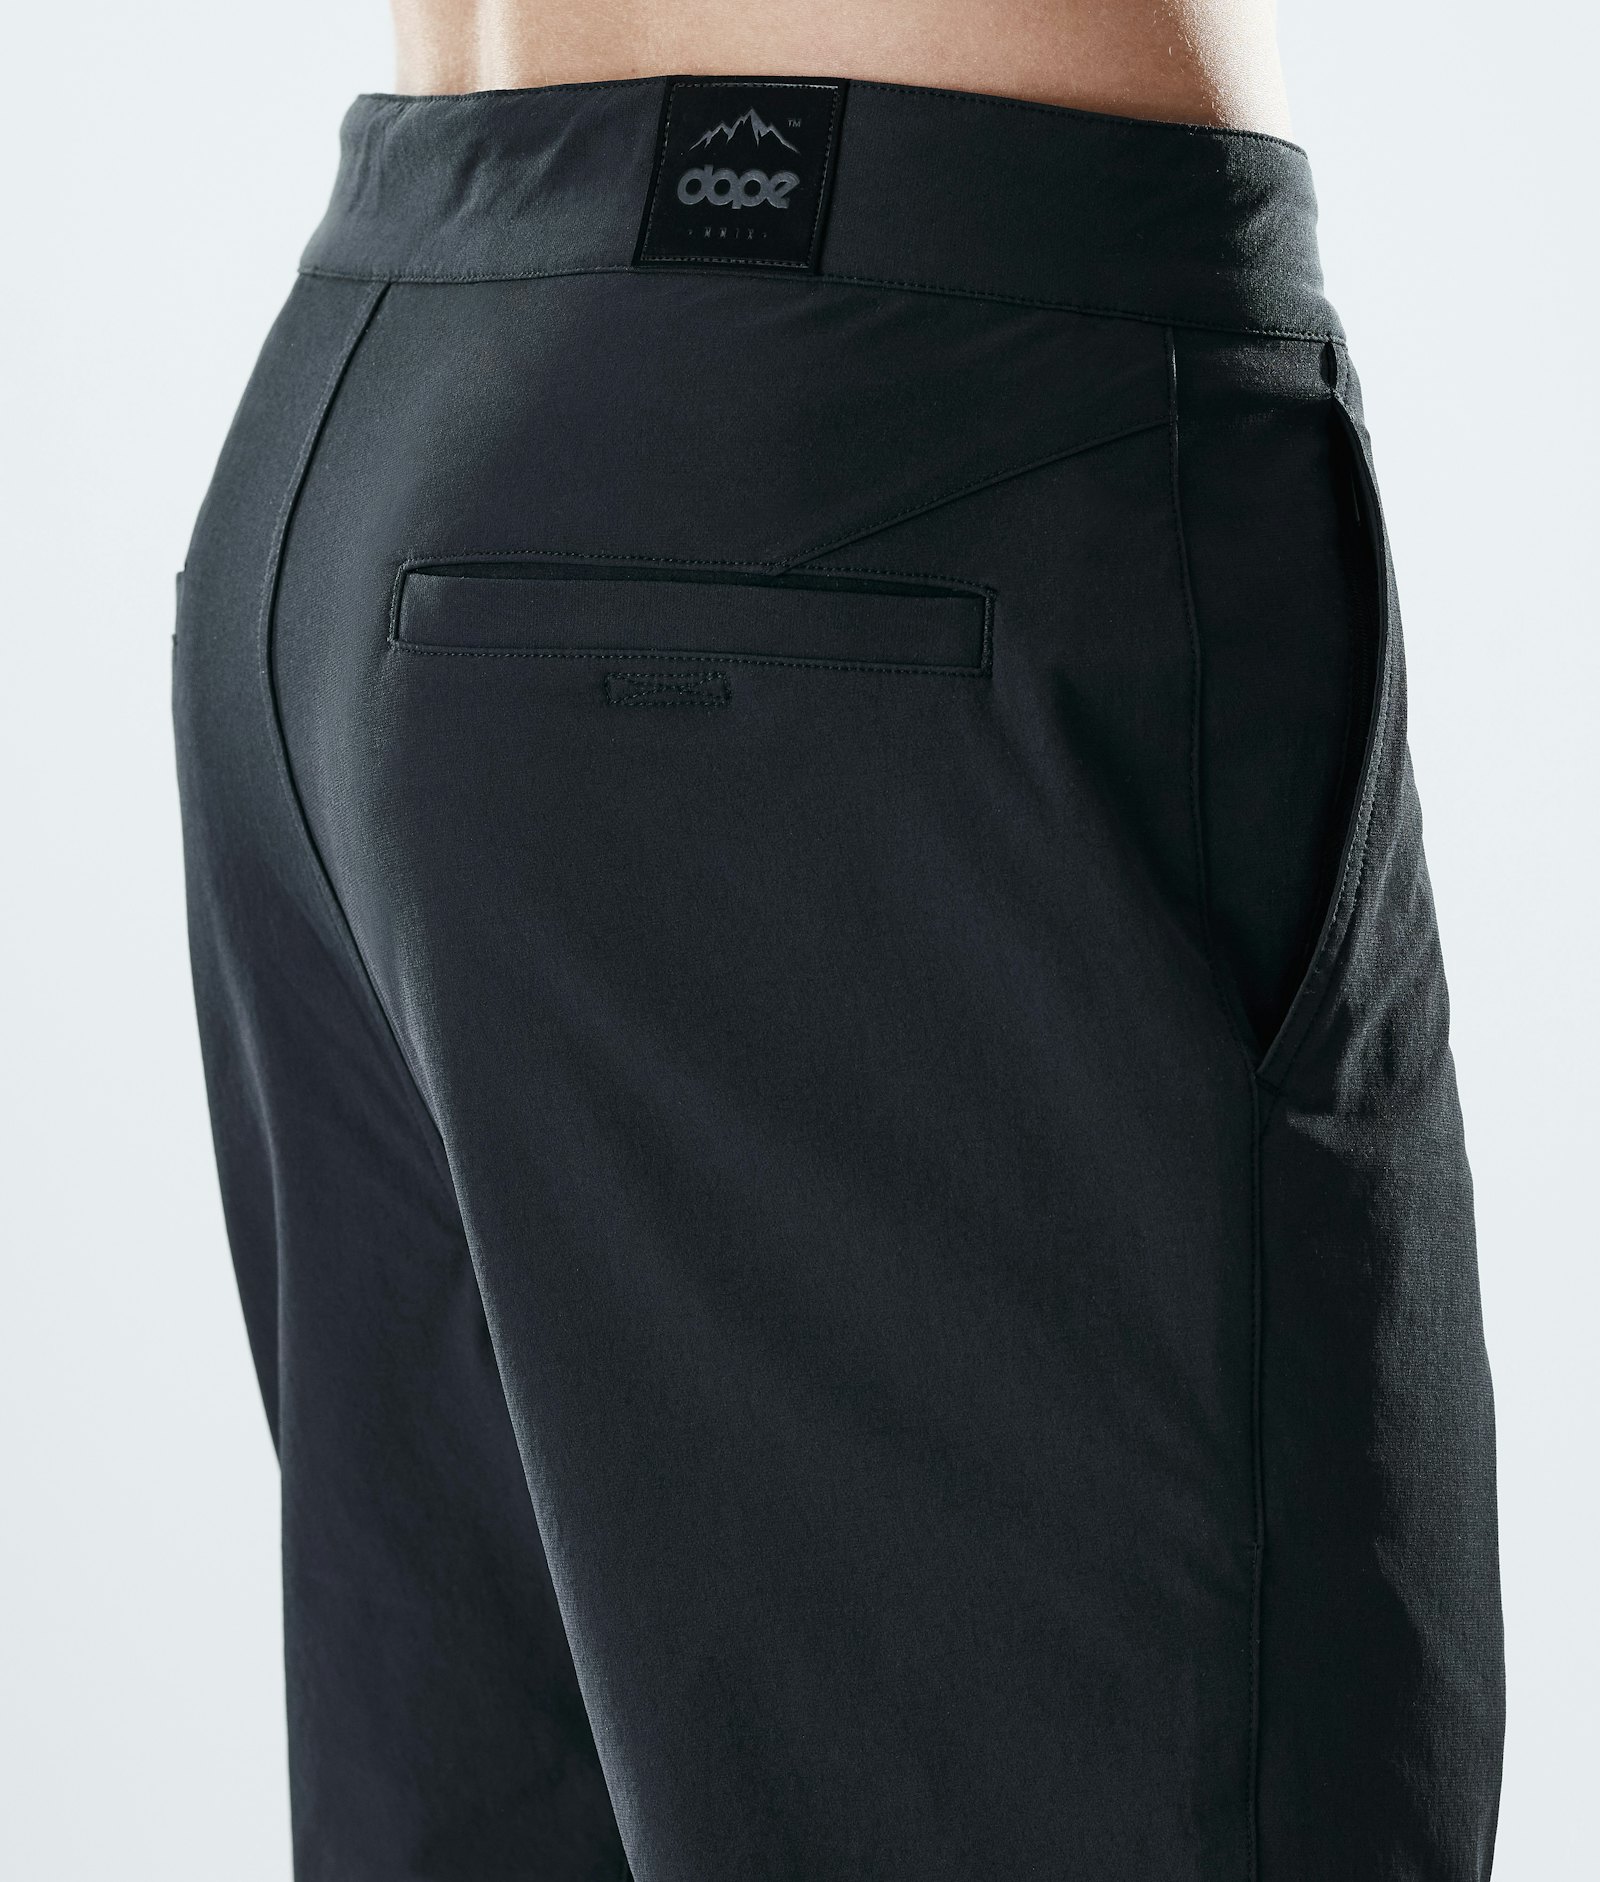 Rover Tech 2021 Pantalon Randonnée Homme Black